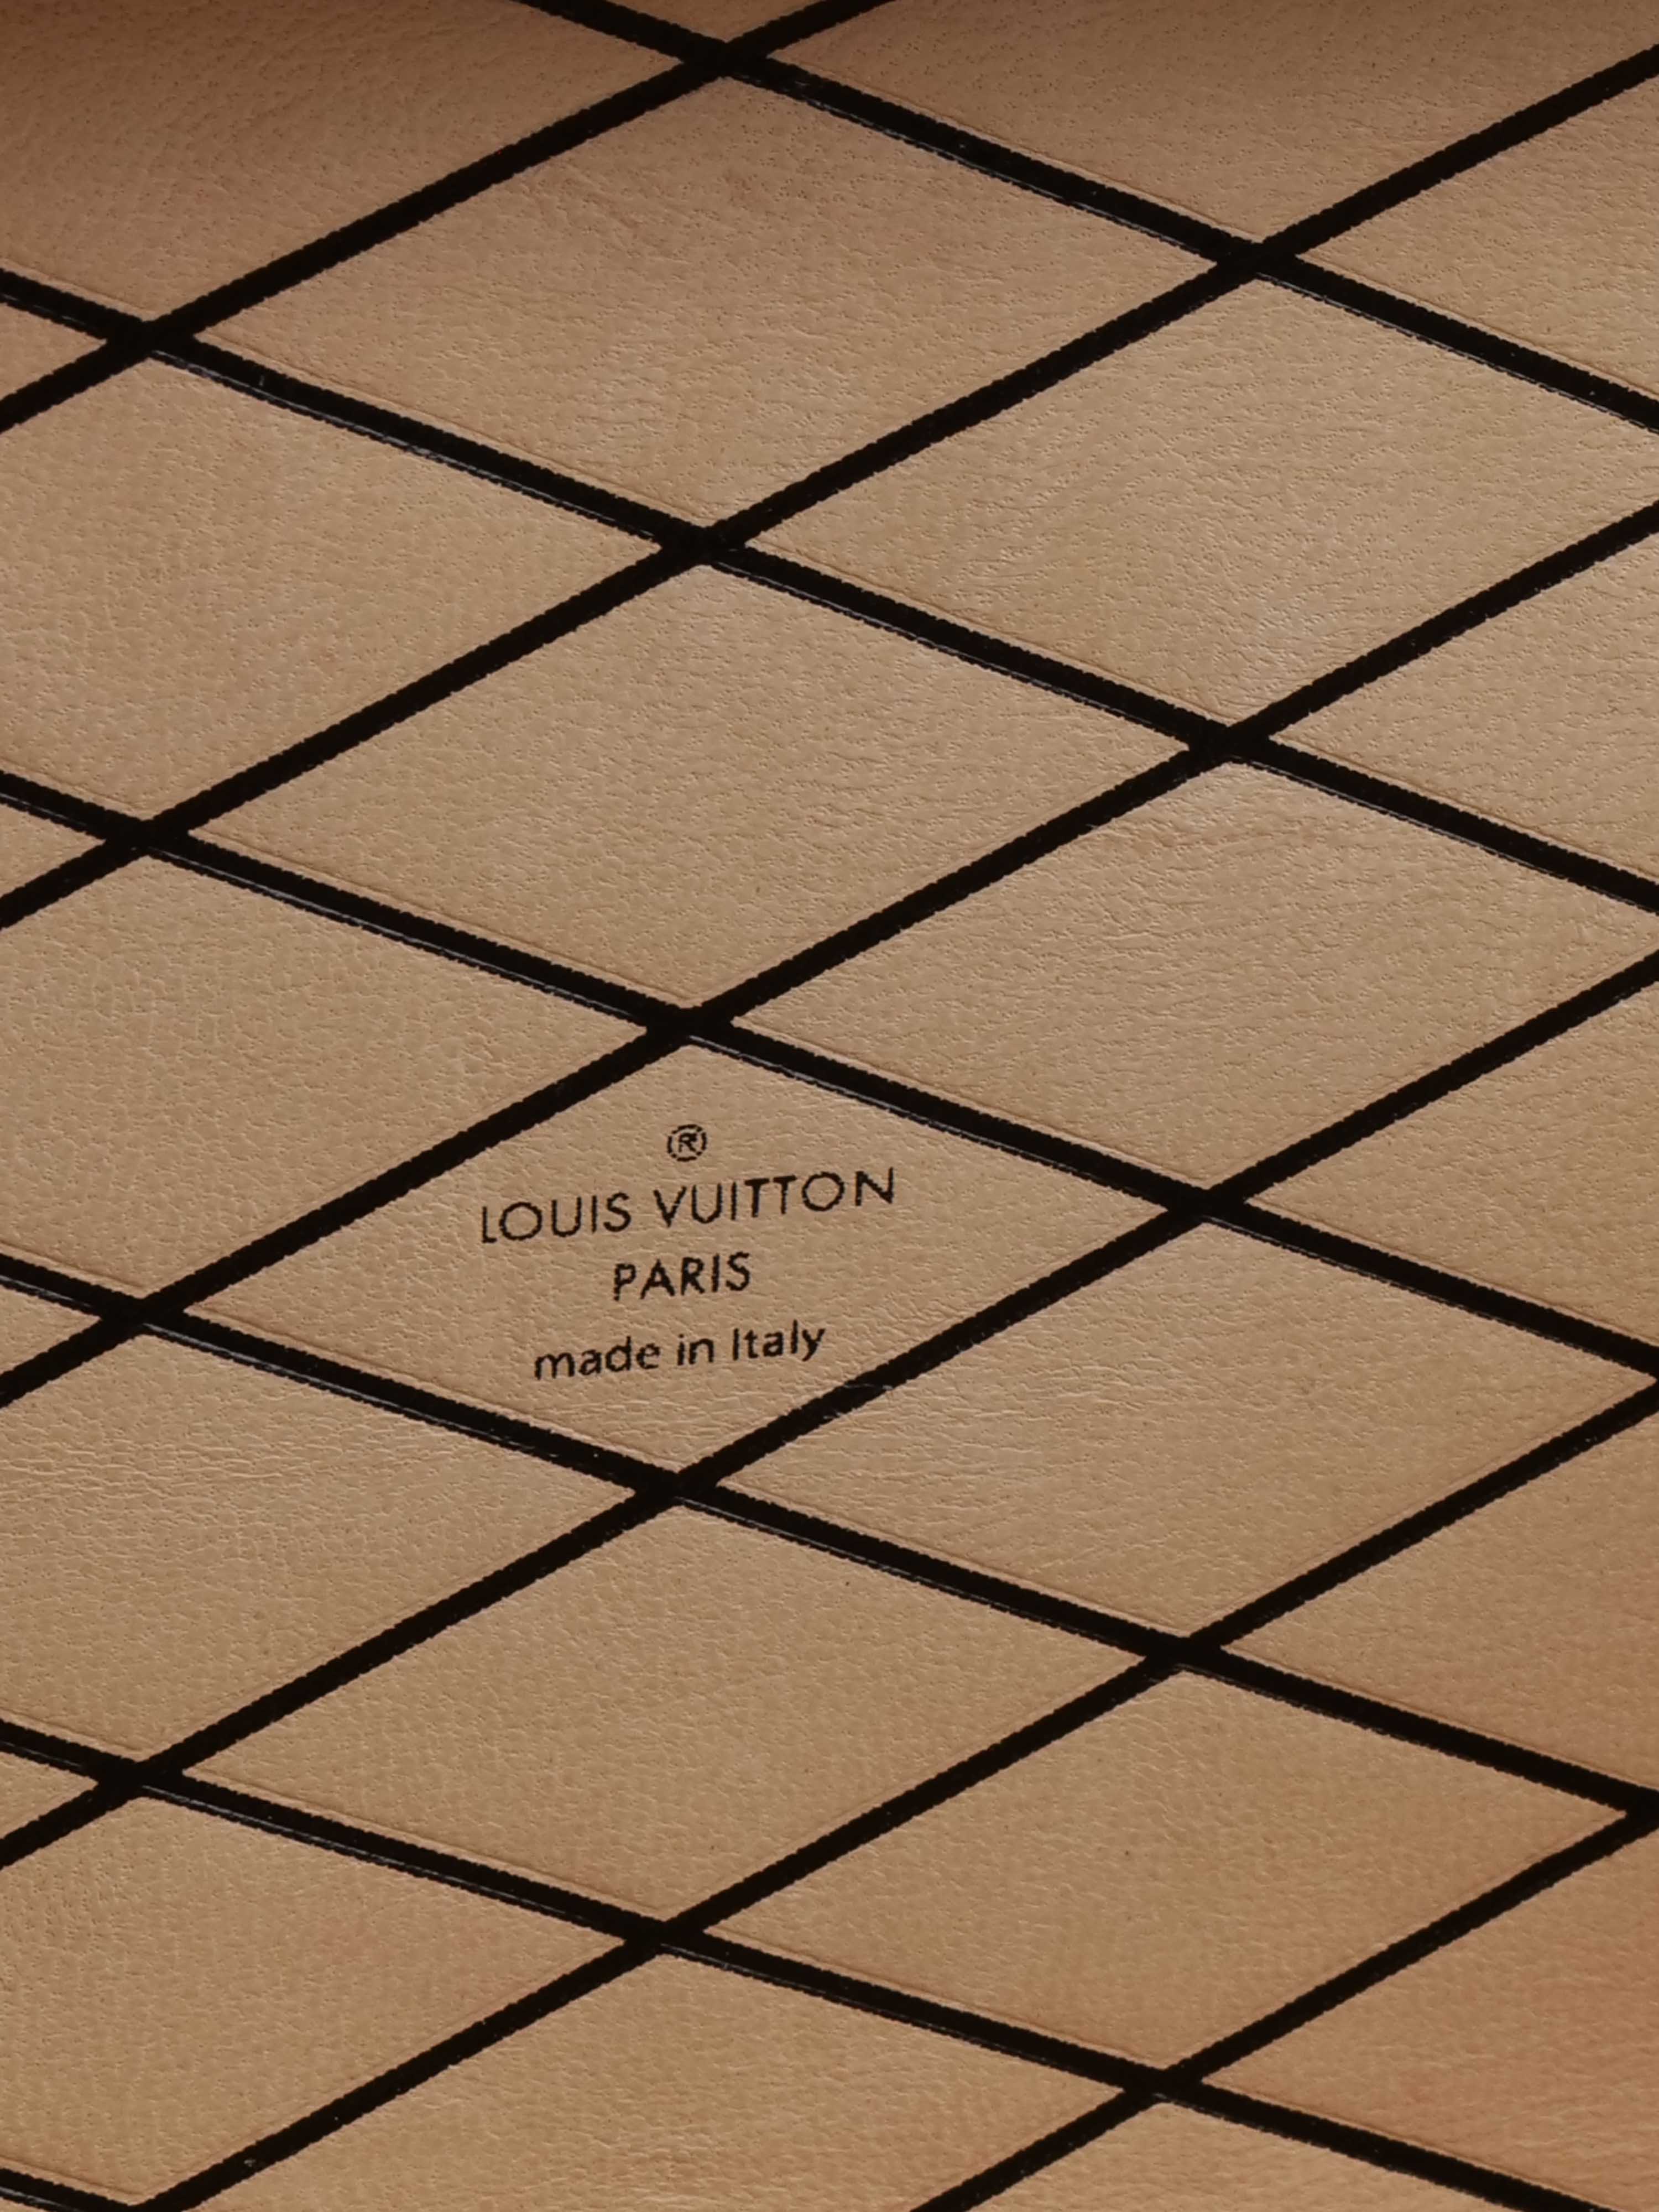 Louis Vuitton Petite Malle.